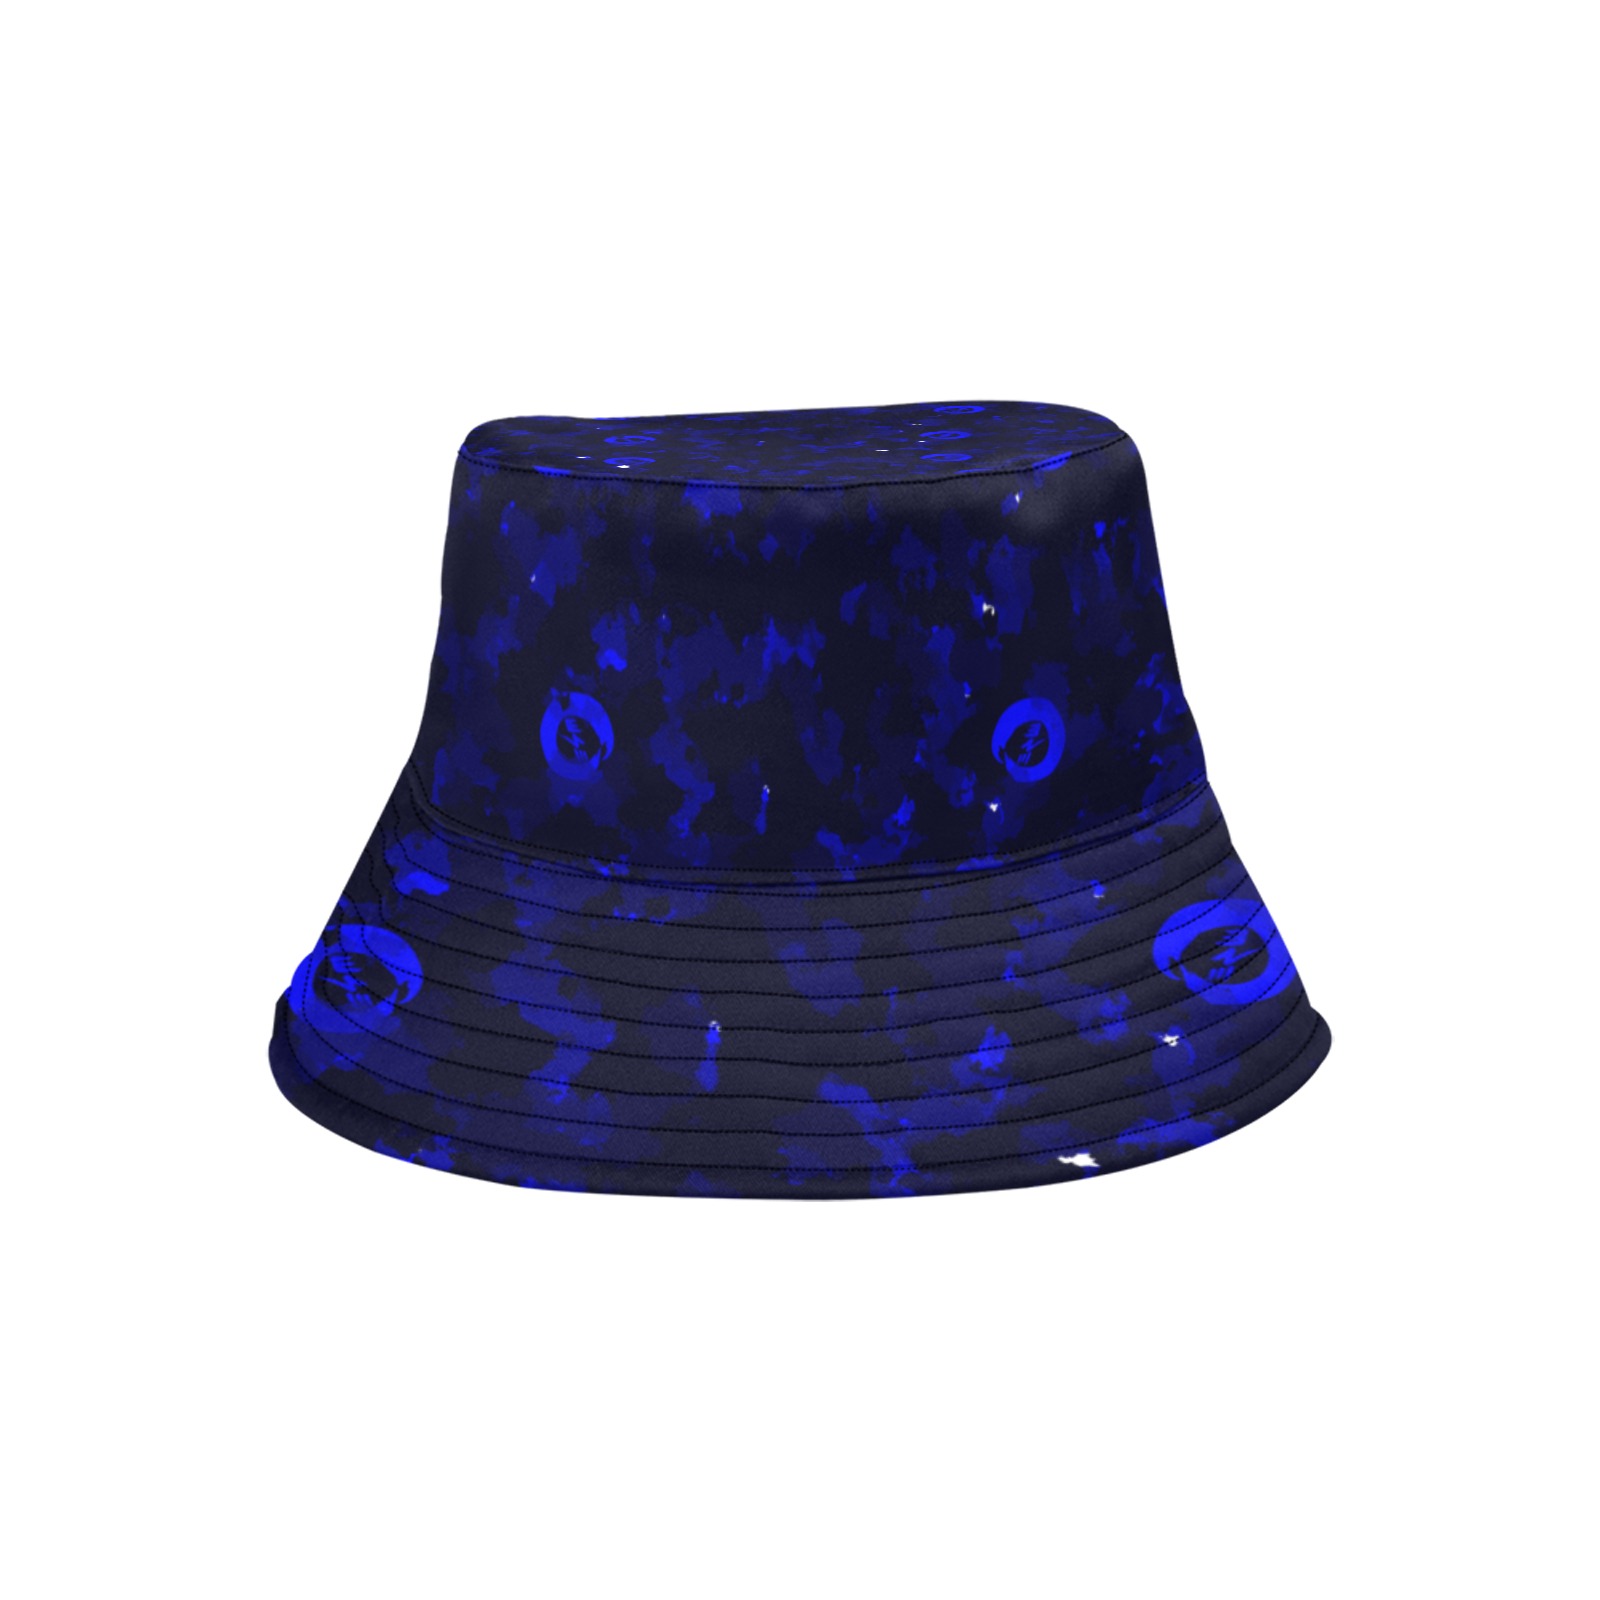 New Project (10) Unisex Summer Bucket Hat